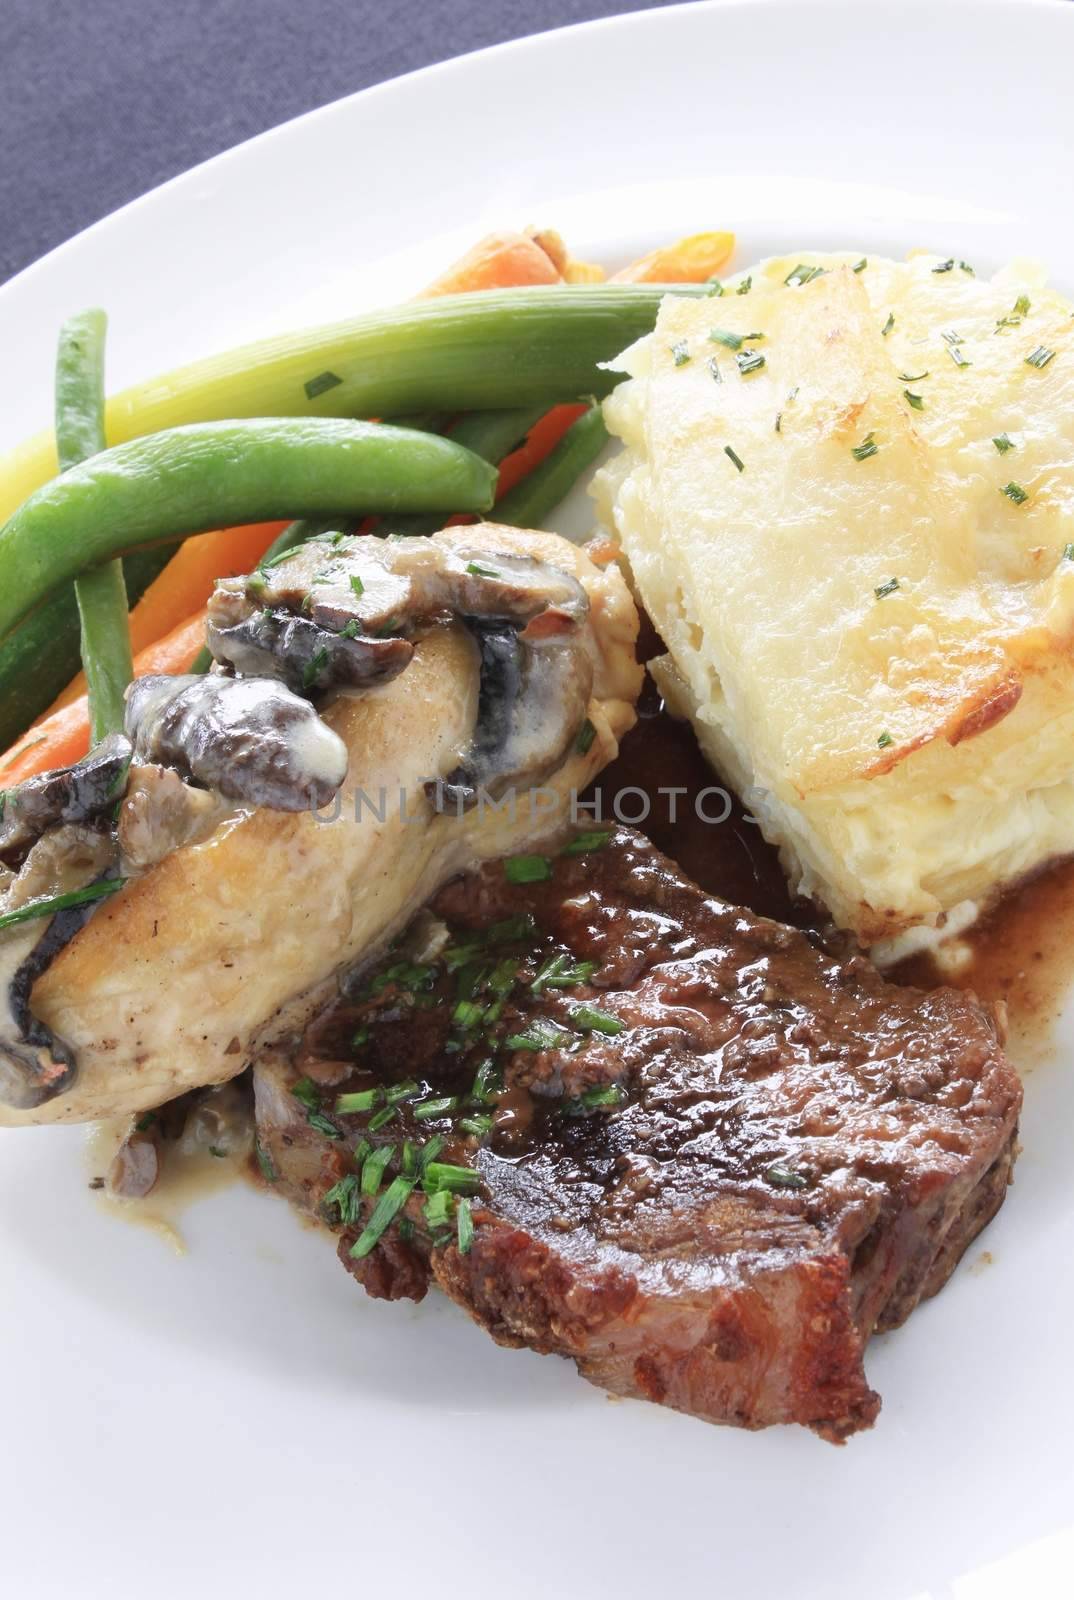 steak meal by neil_langan